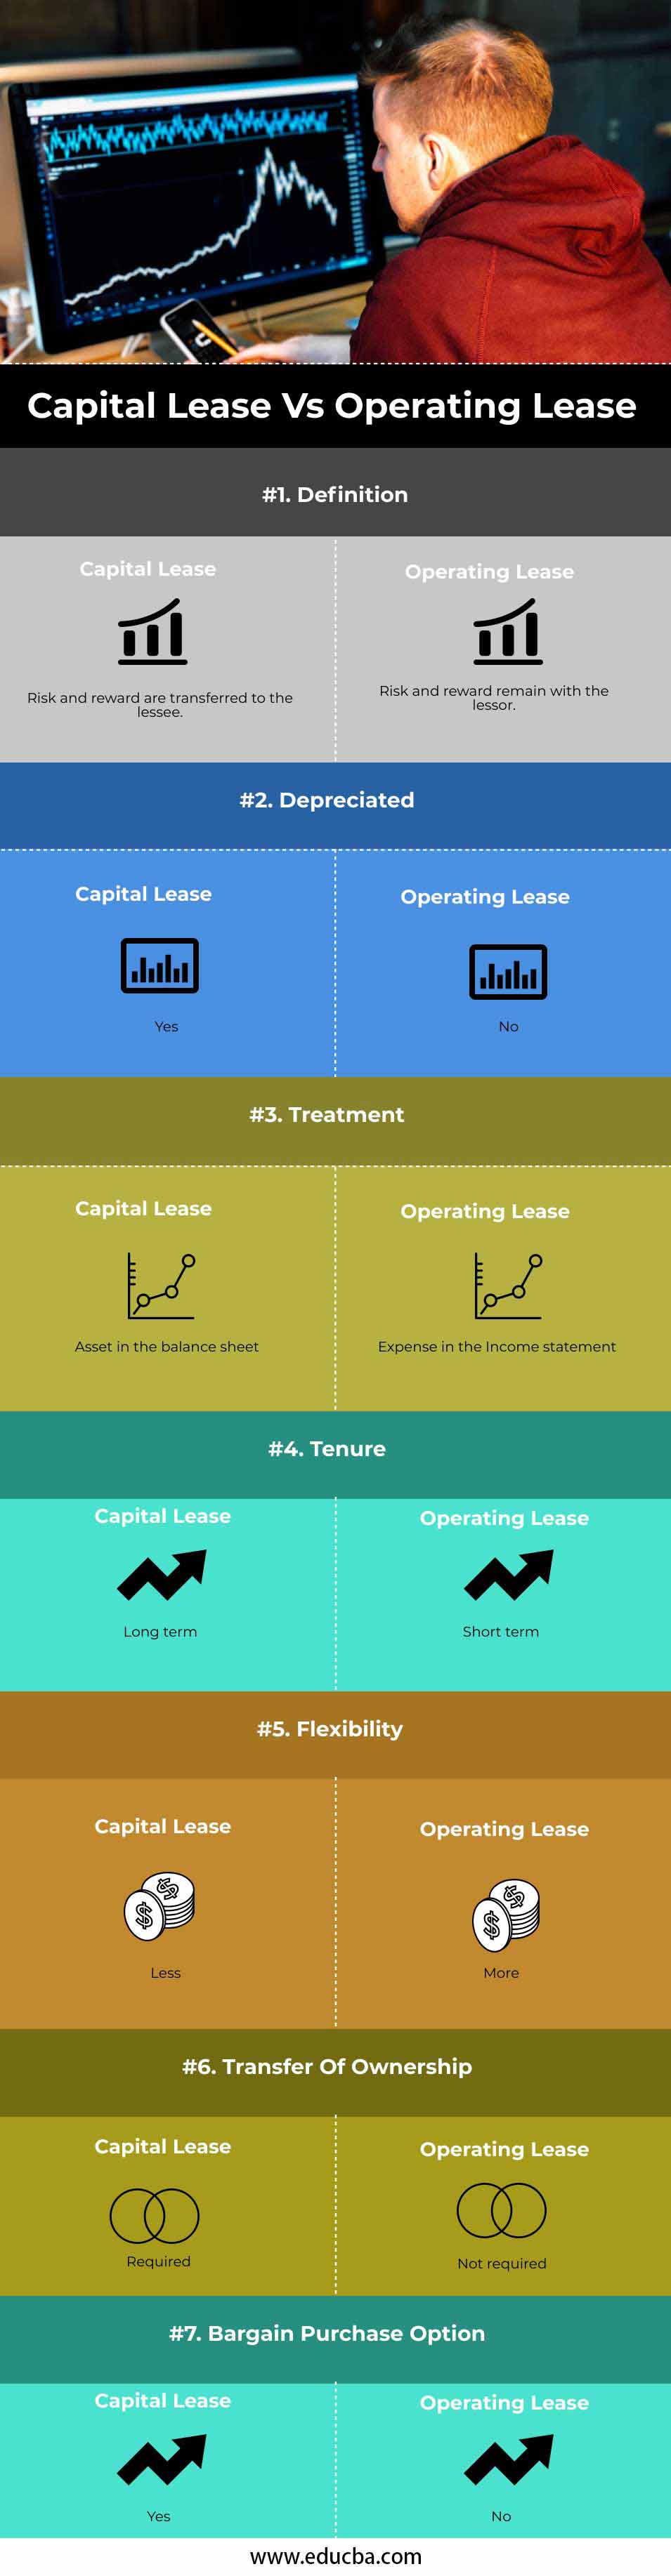 Capital Lease vs Operating Lease-info